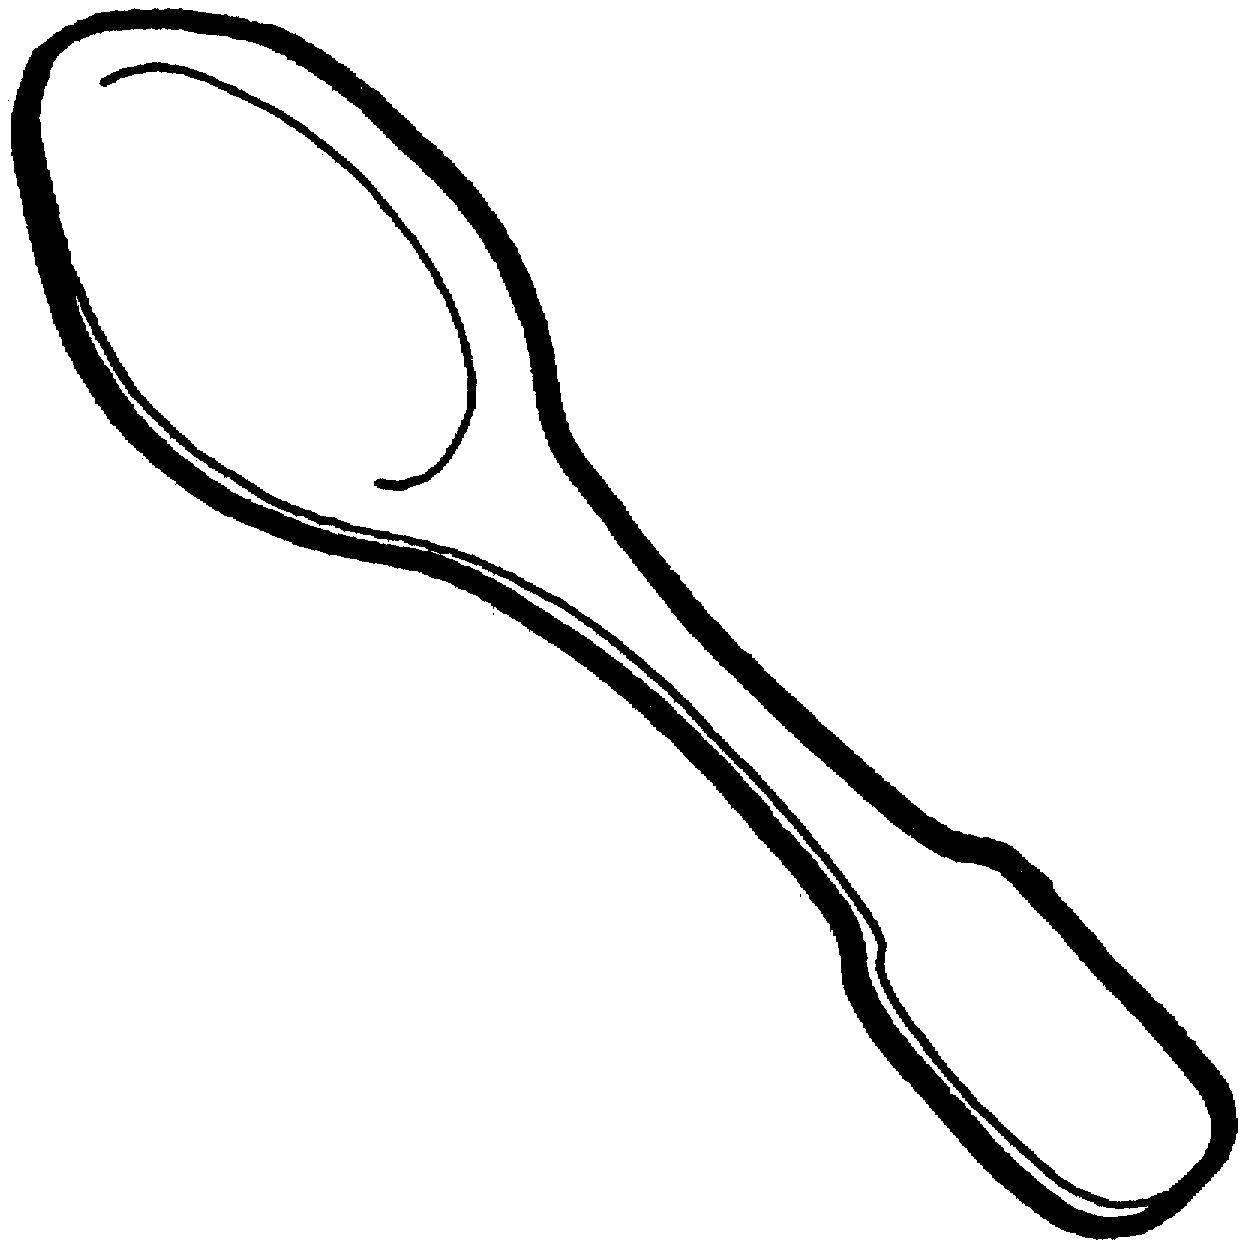 Coloring Spoon. Category spoon. Tags:  Crockery, Cutlery.